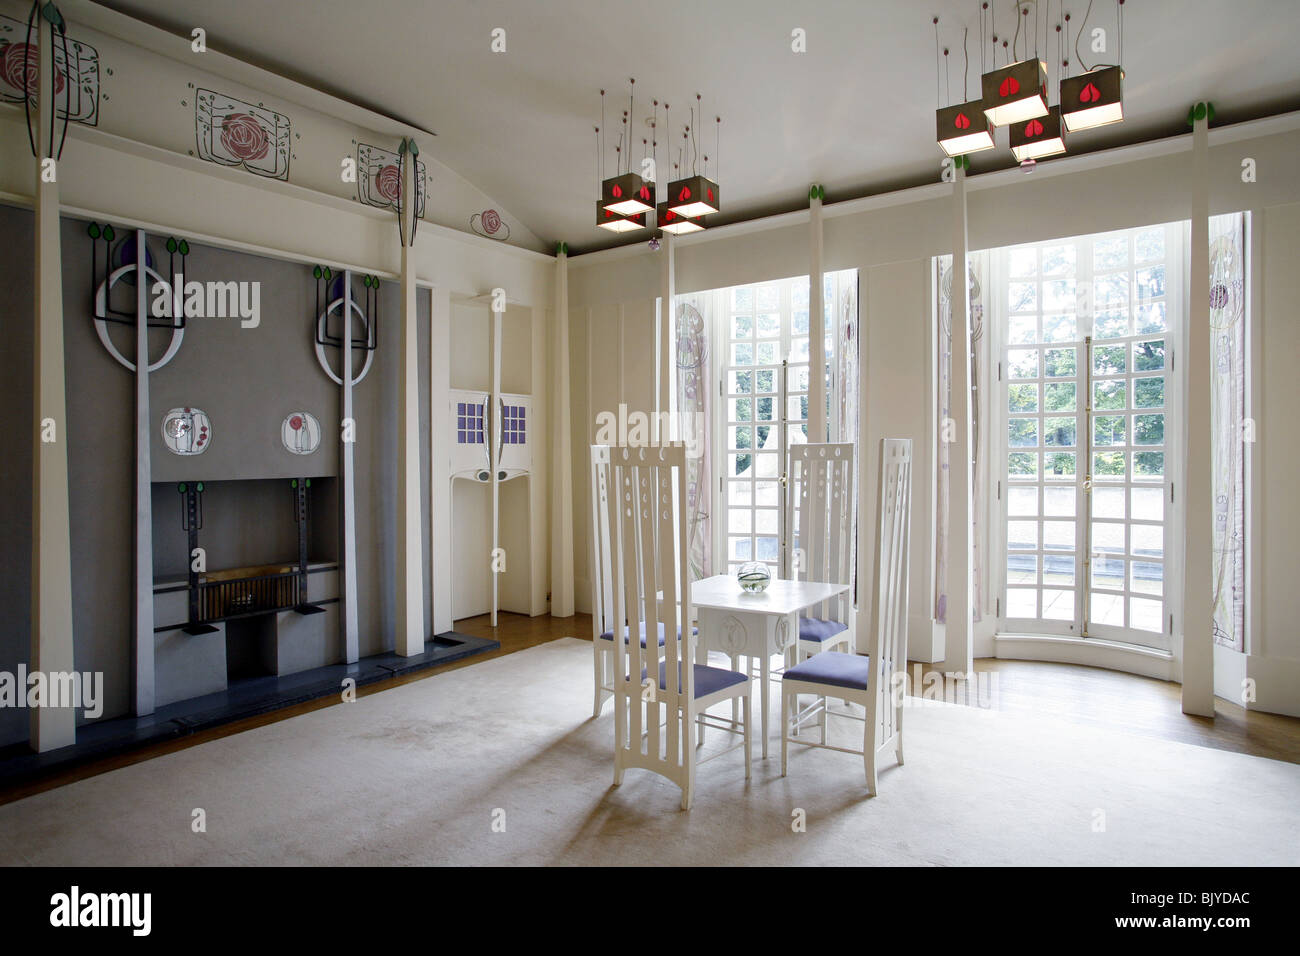 Charles Rennie Mackintosh, House for an Art Lover, The Music Room, Glasgow, Scotland Stock Photo